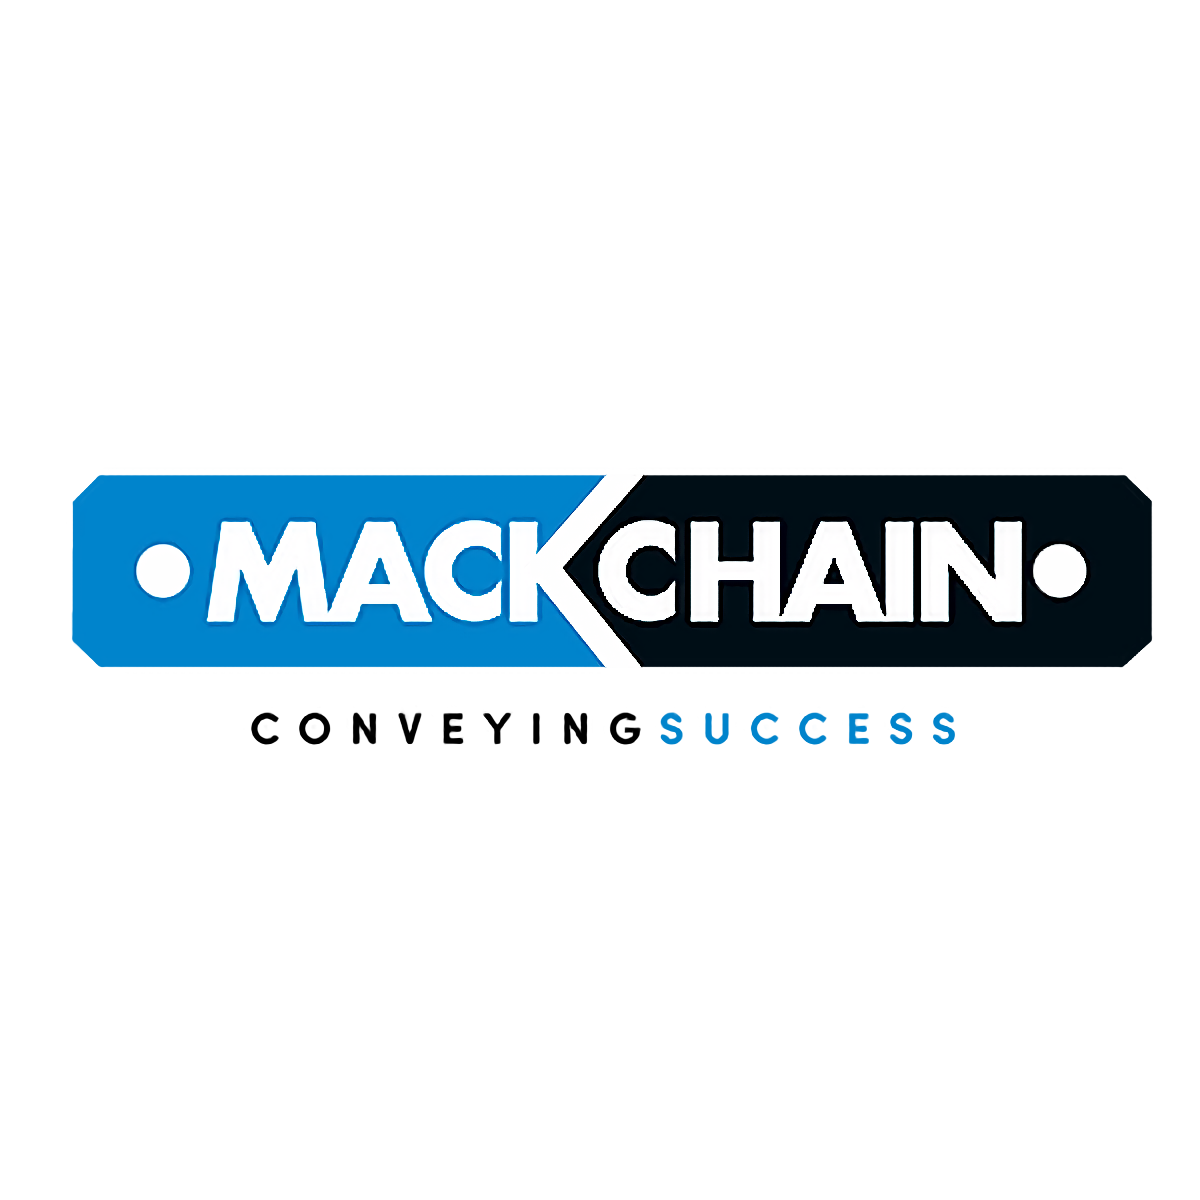 Mack Chain logo